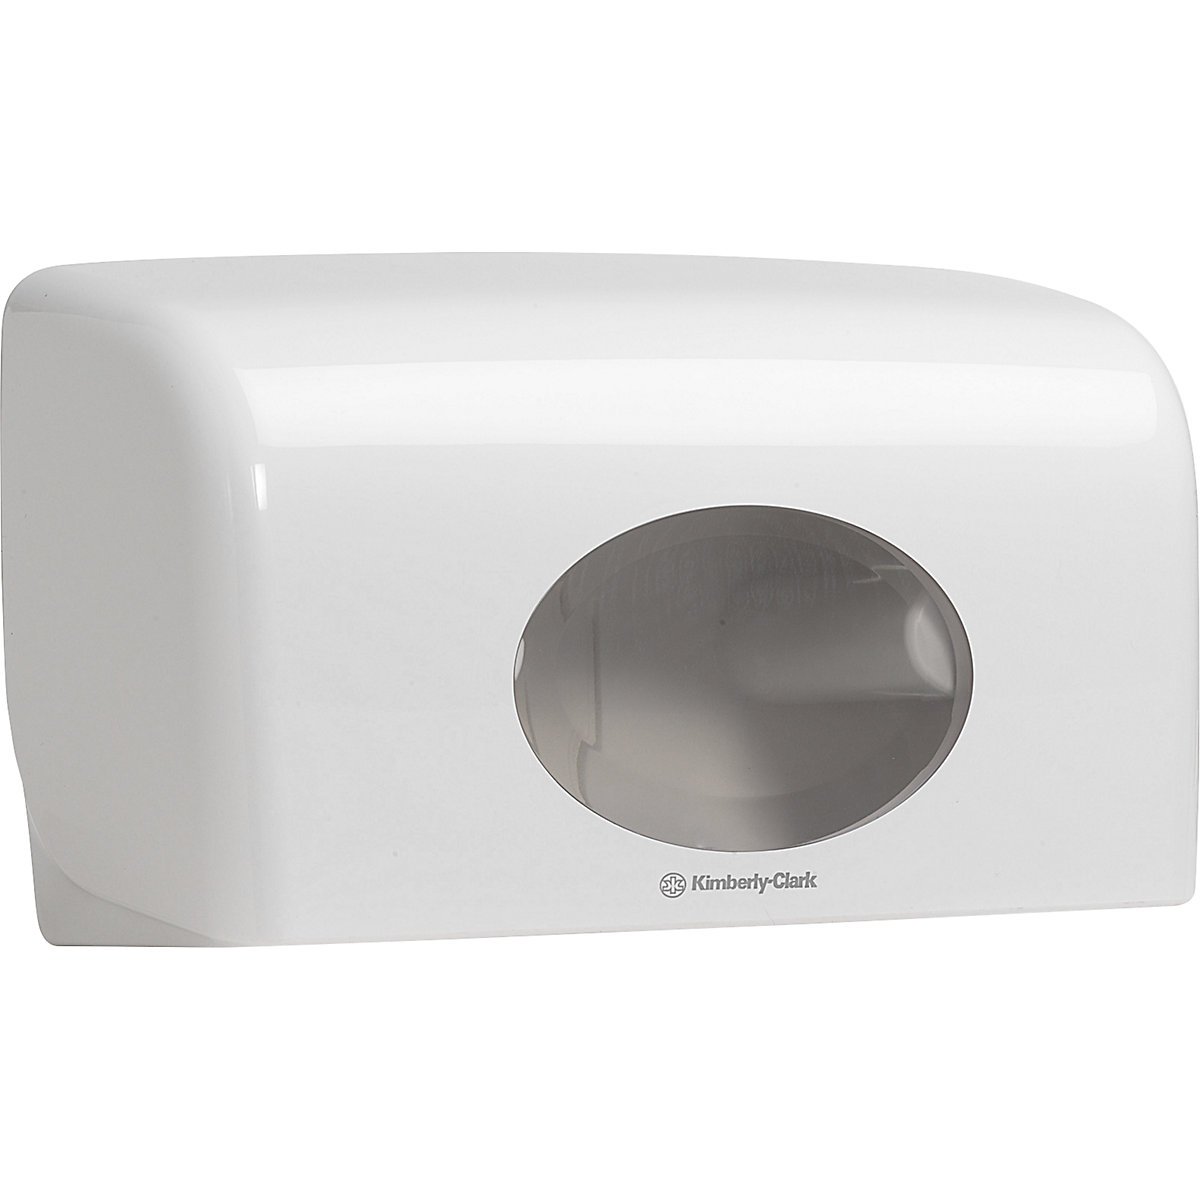 Aquarius&trade;-toiletpapierdispenser 6992 - Kimberly-Clark